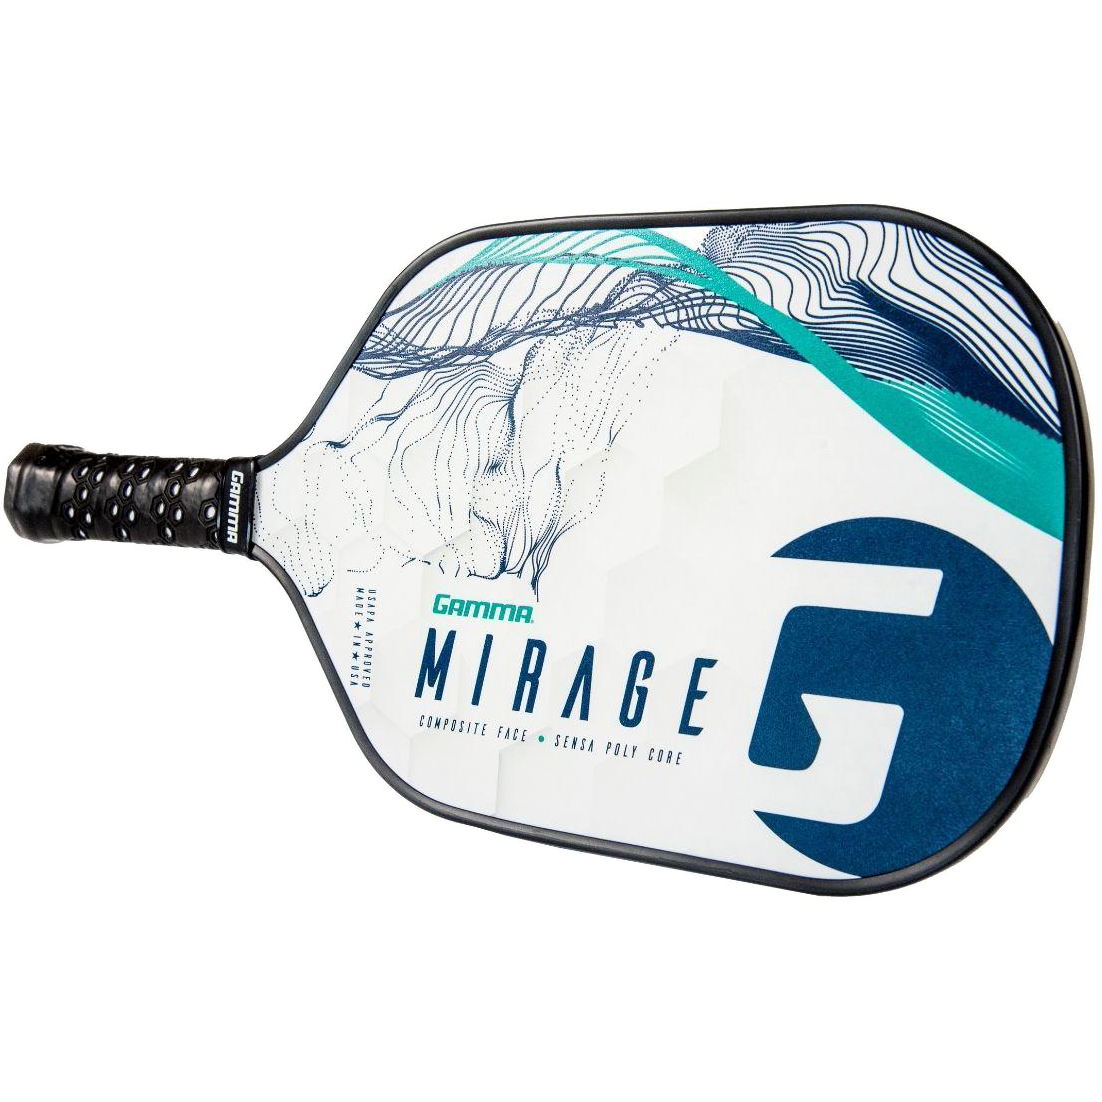 Mirage - Navy/Teal alternate view